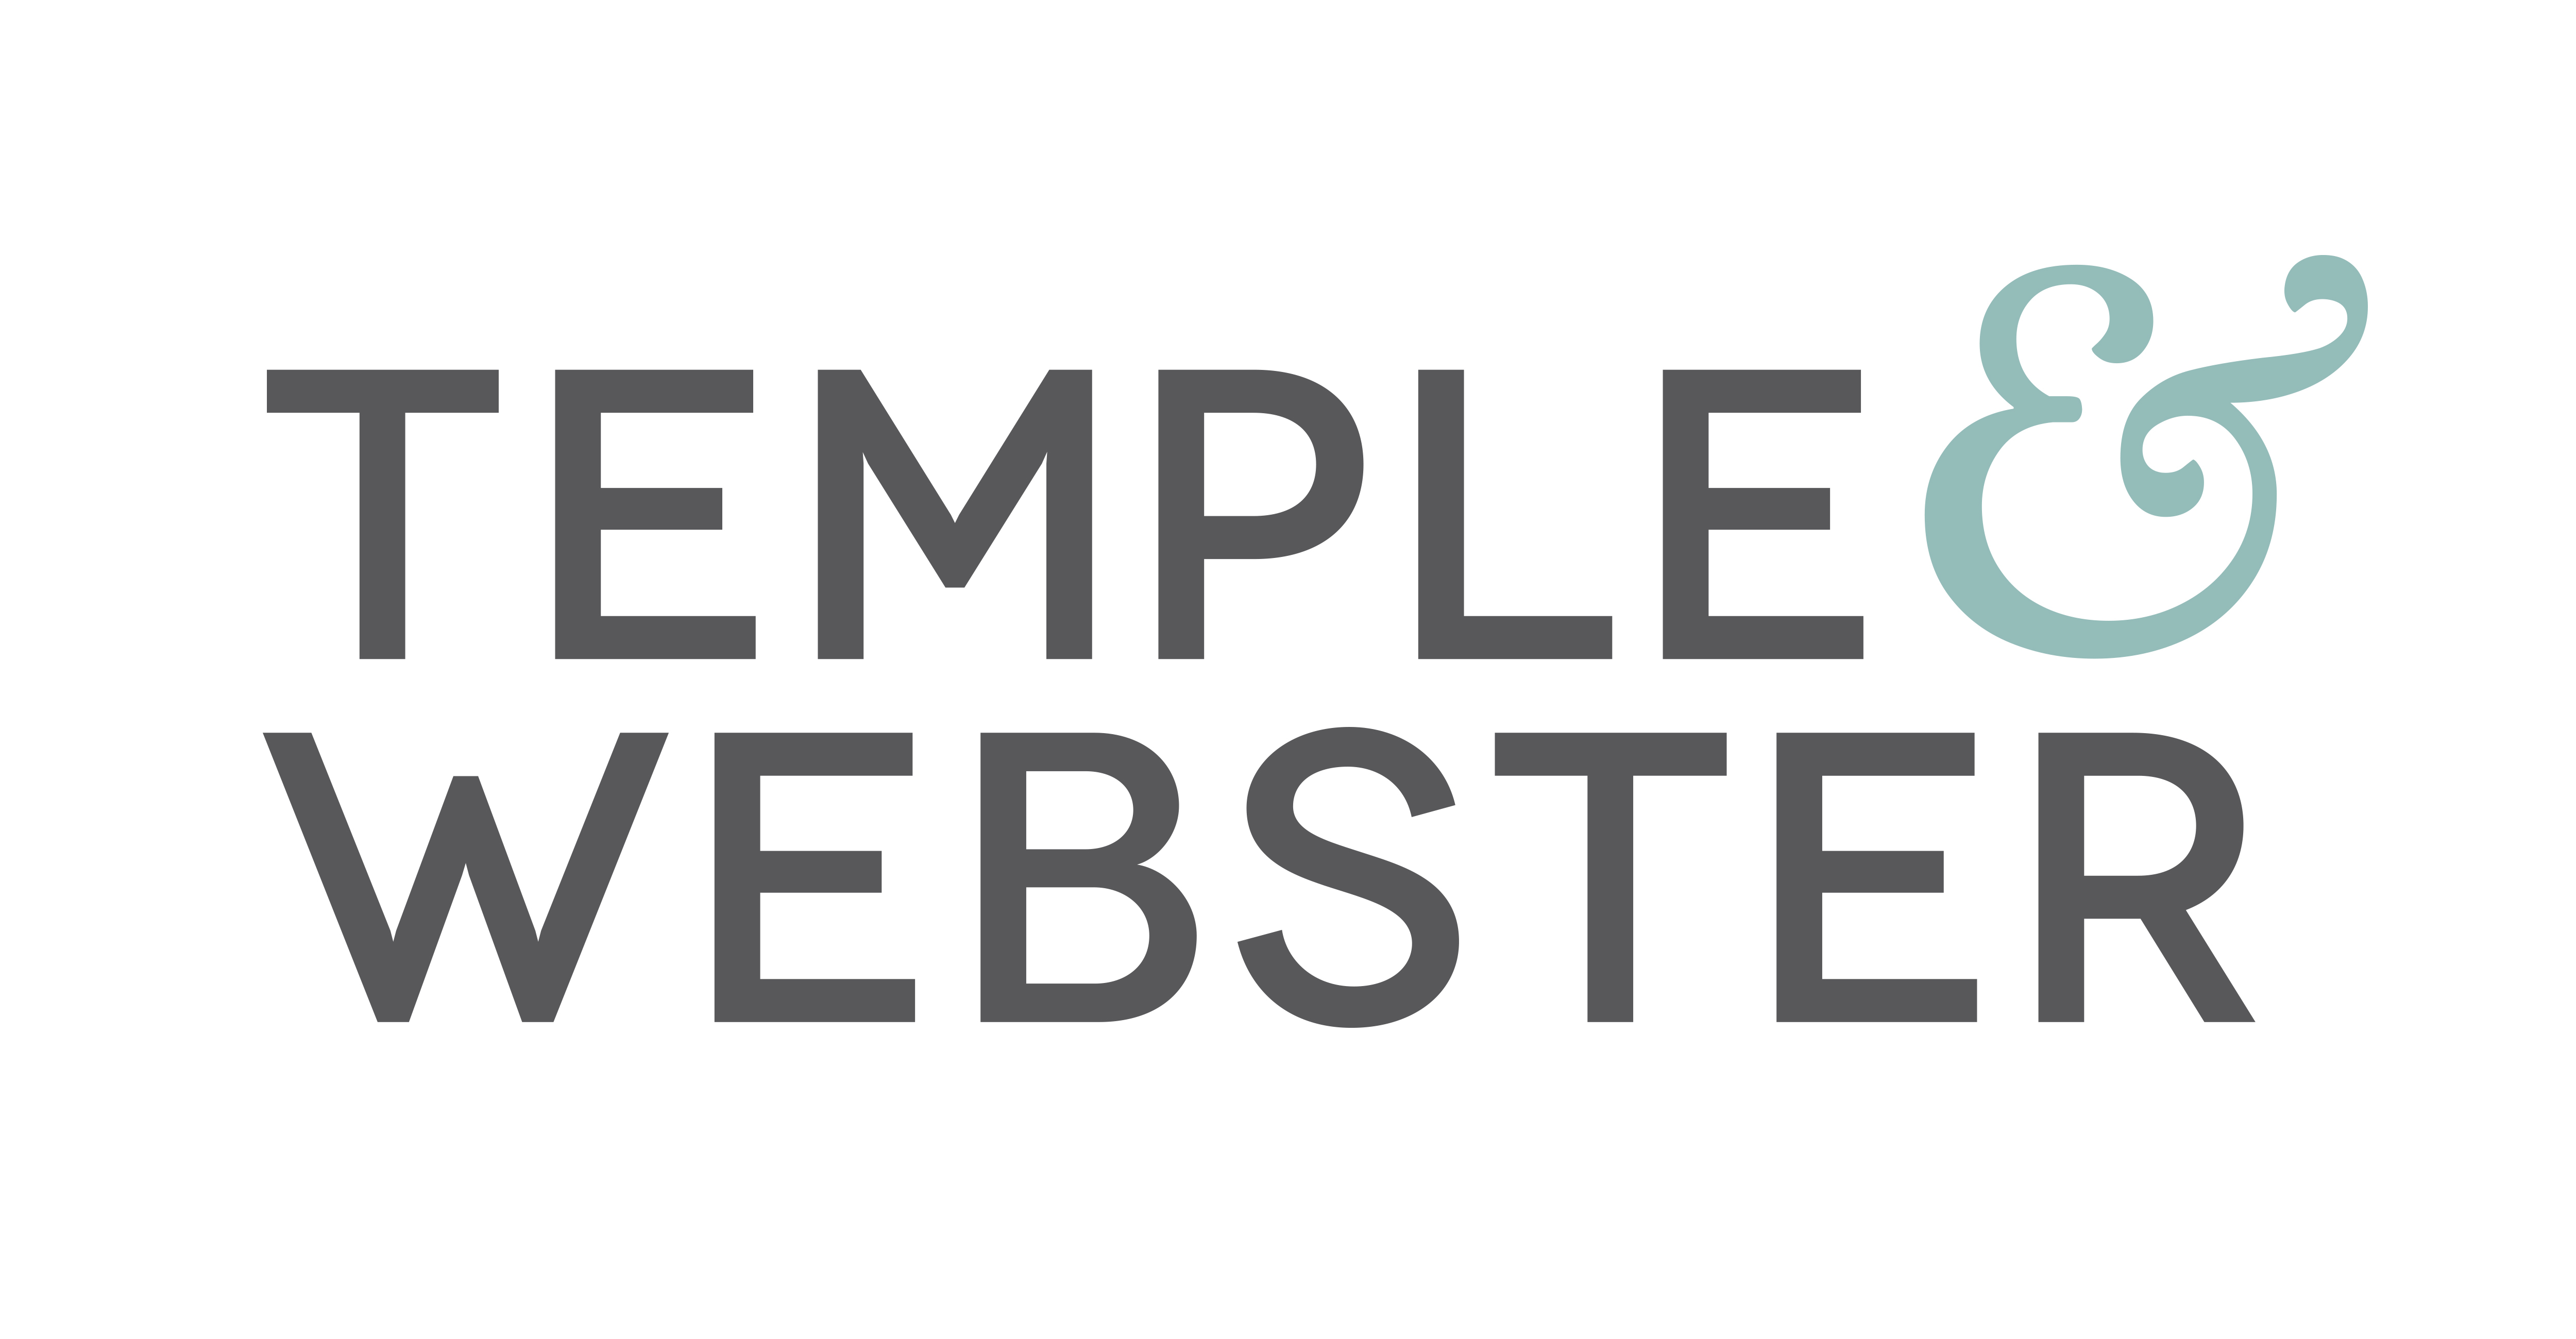 Test for visible HTML - Temple & Webster